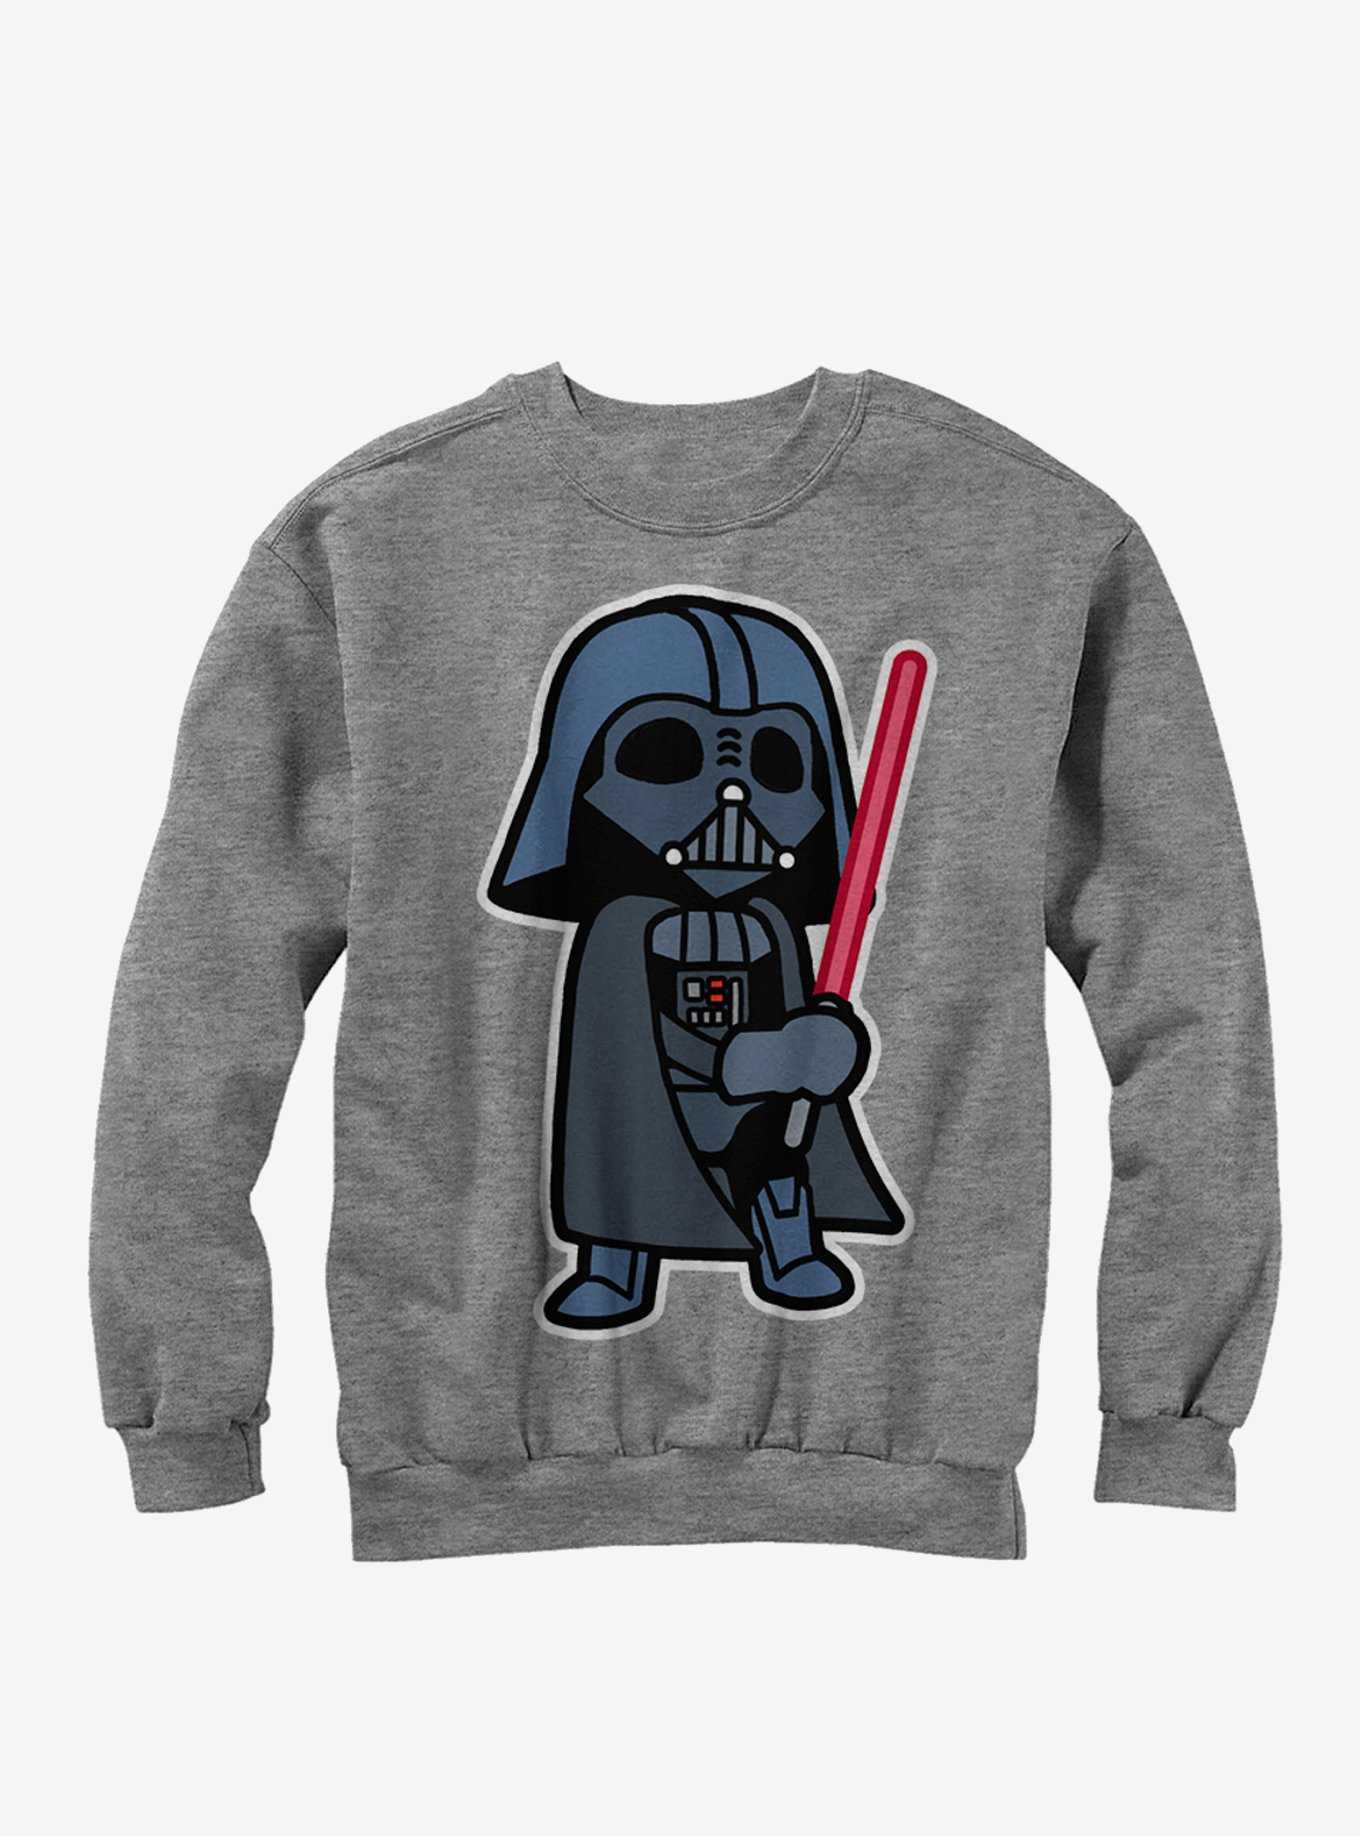 Star Wars Darth Vader Cartoon Sweatshirt, , hi-res